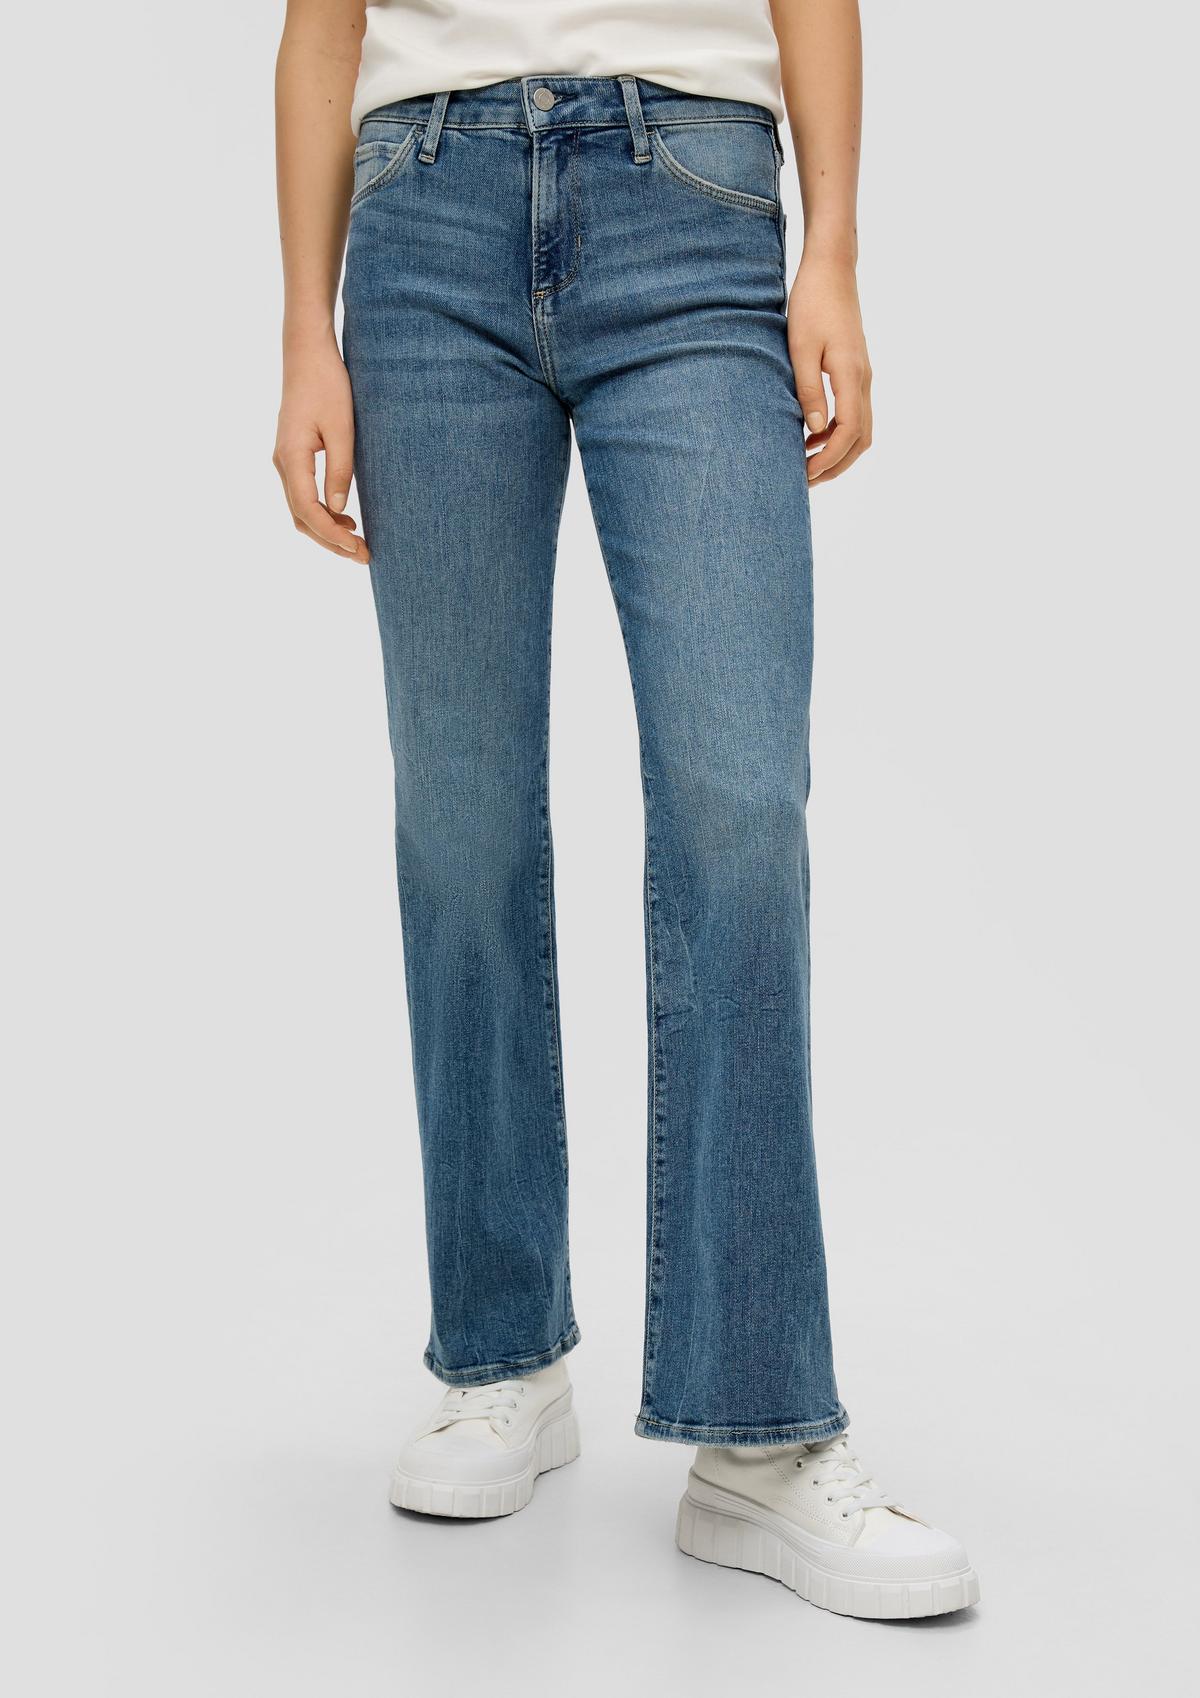 s.Oliver Selena jeans / regular fit / mid rise / flared leg